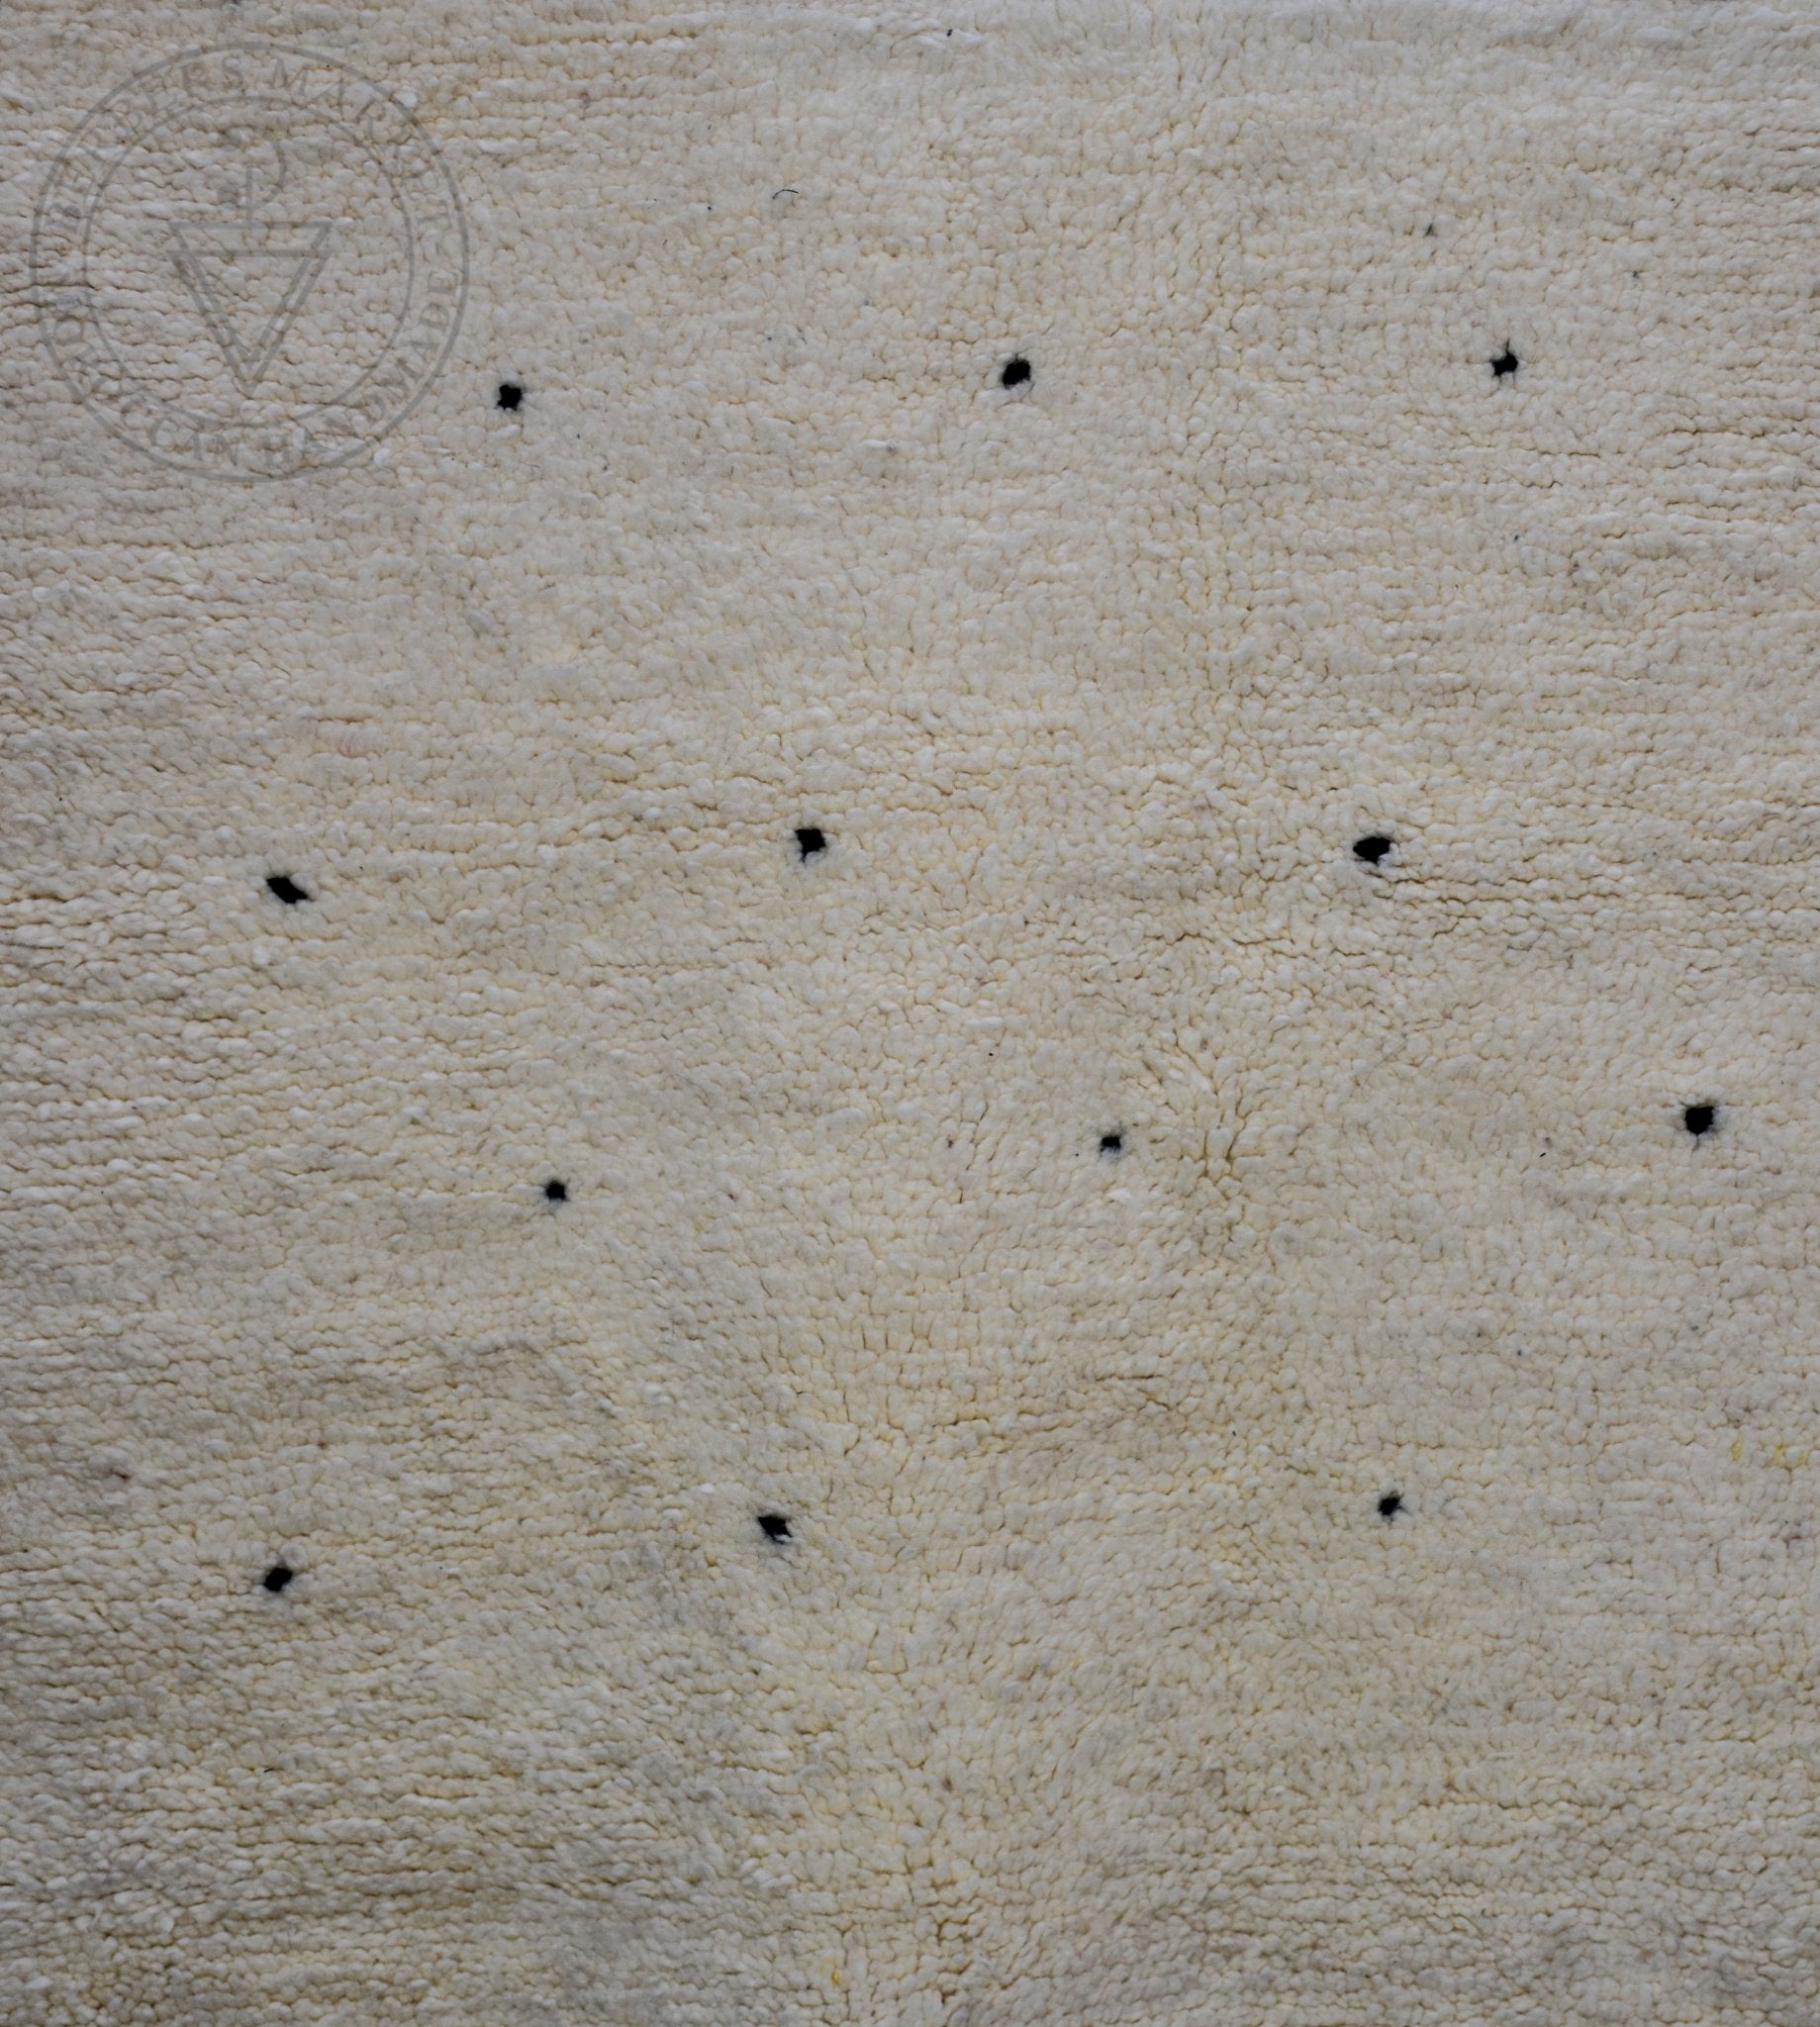 Polka dots Beni ourain Moroccan rug - 5.6 x 7.22 ft / 170 x 220 cm - Berbers Market